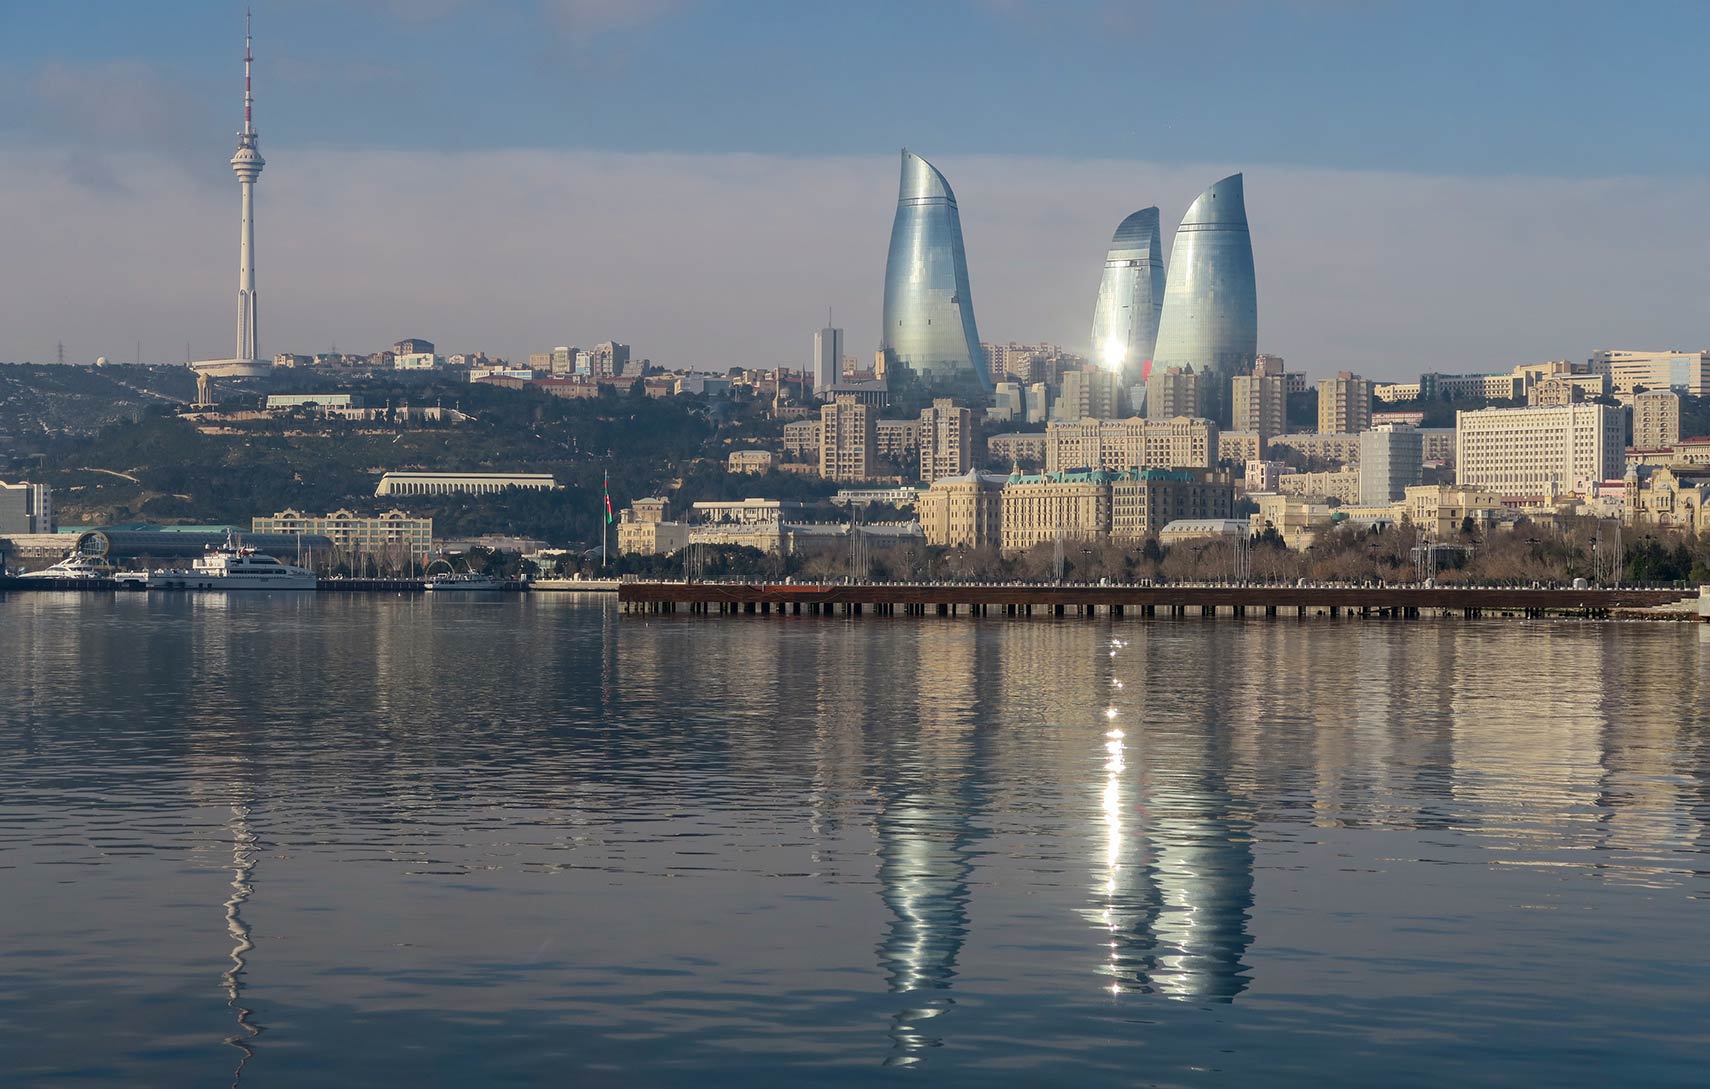 Panorama of Baku, capital and largest city of Azerbaijan with Flame Towers and the Baku TV Tower.